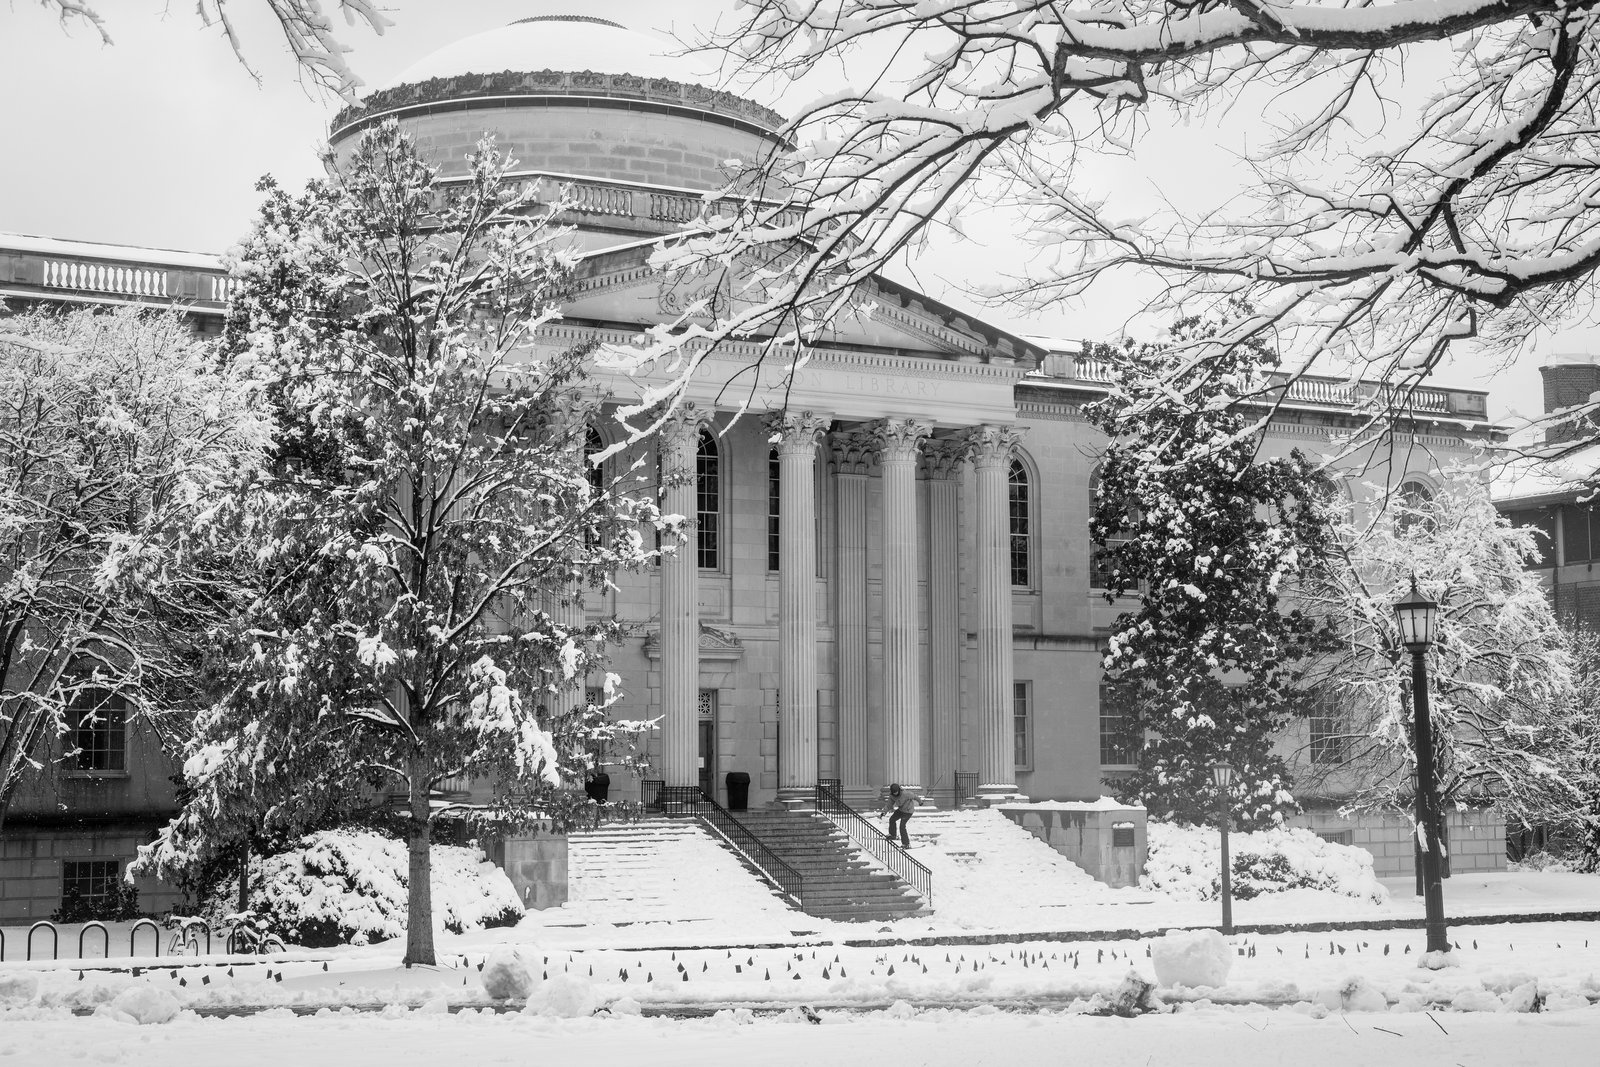 Snow Day at the University of North Carolina